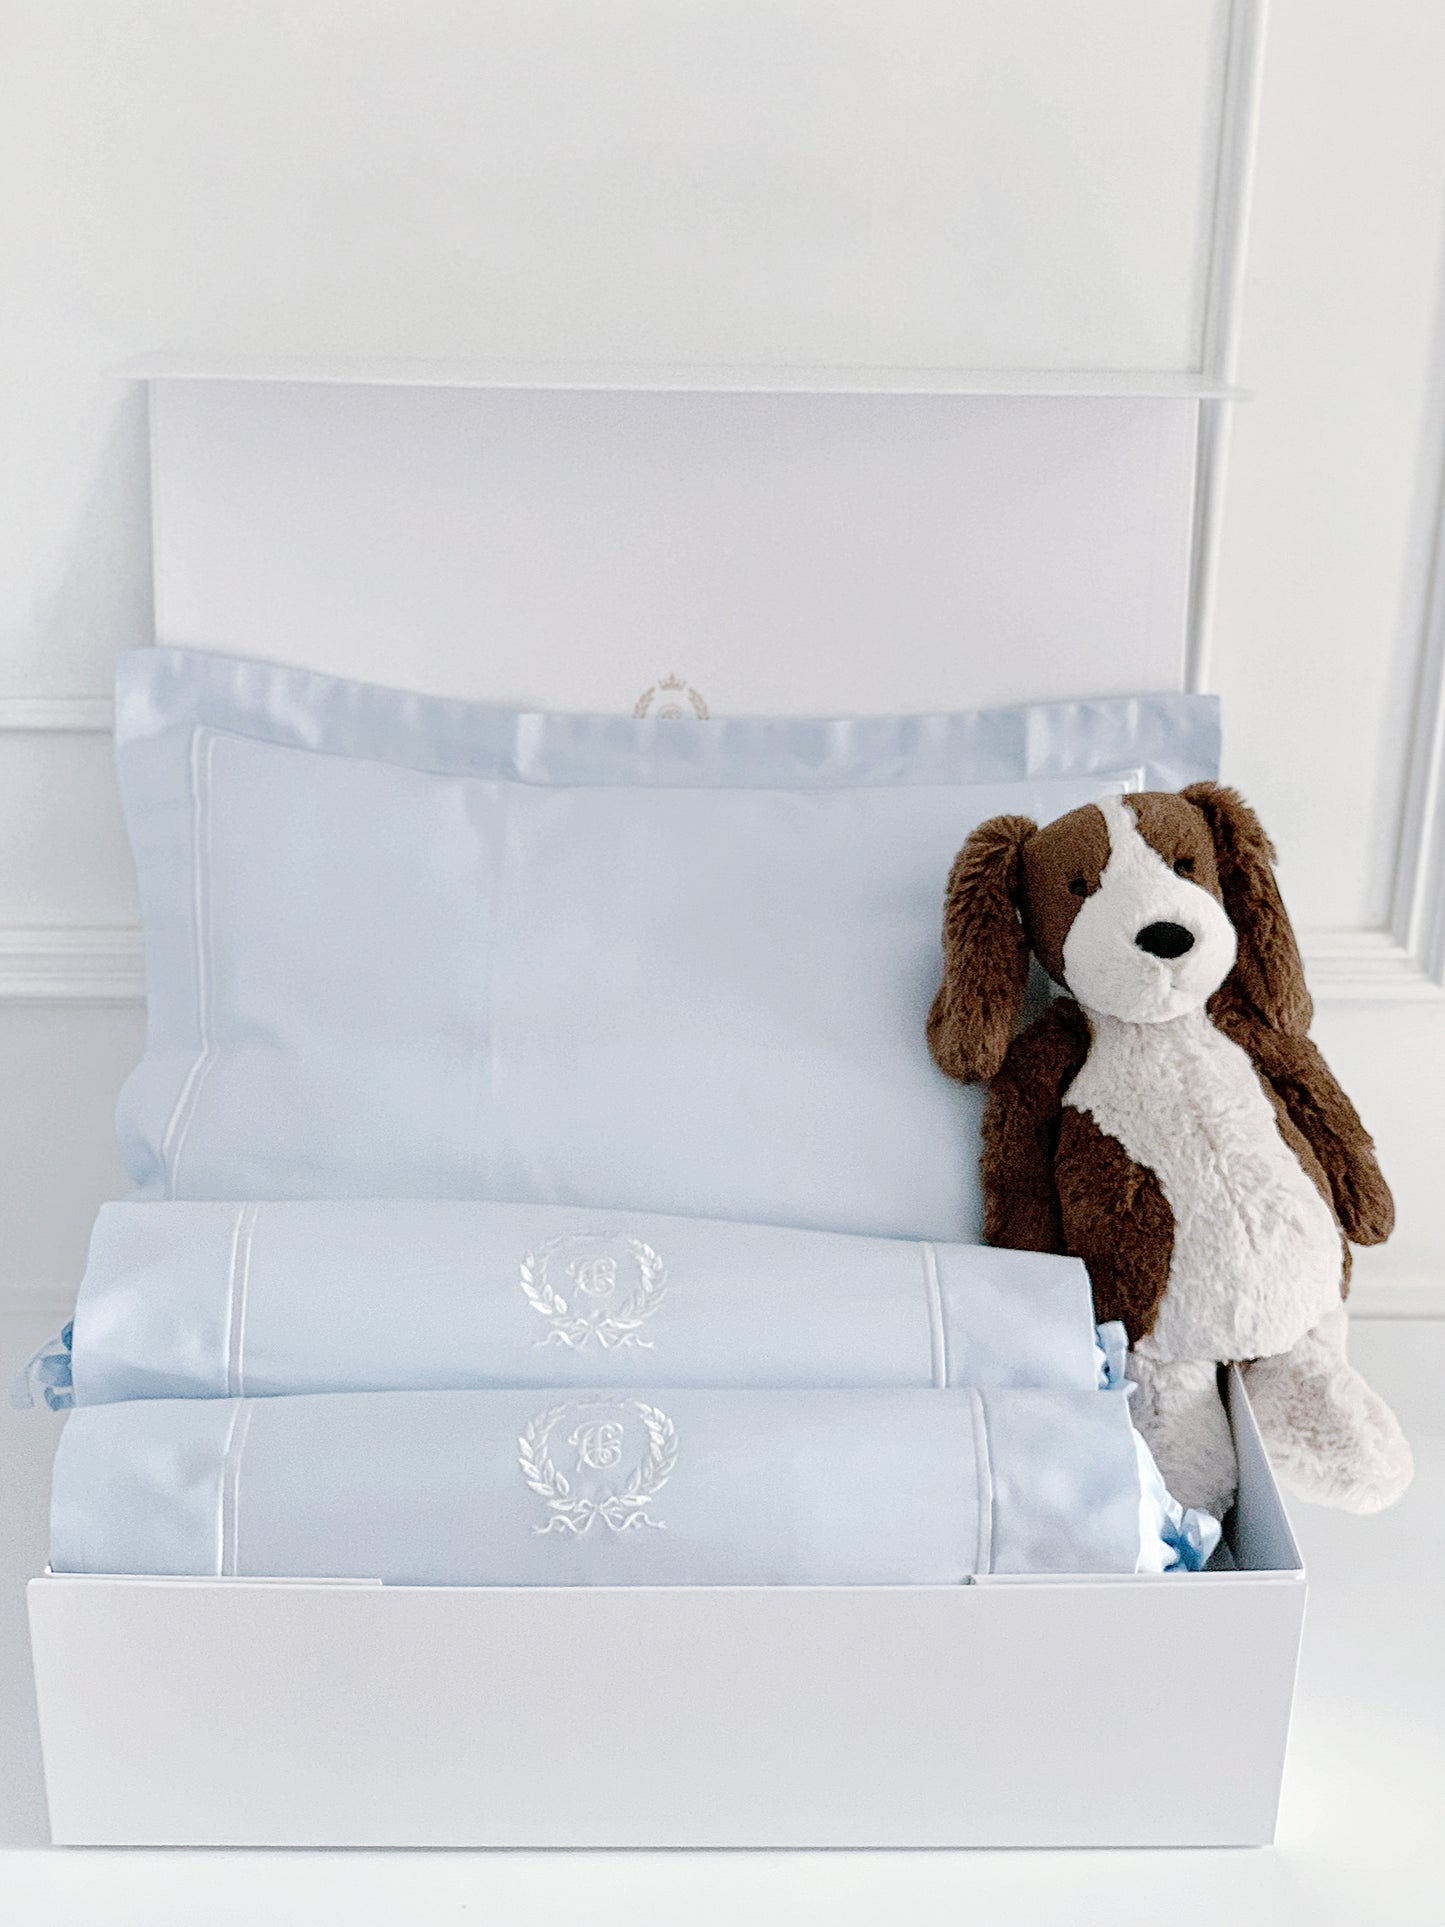 Bonne Nuit Newborn Gift Set - Dreamy Blue